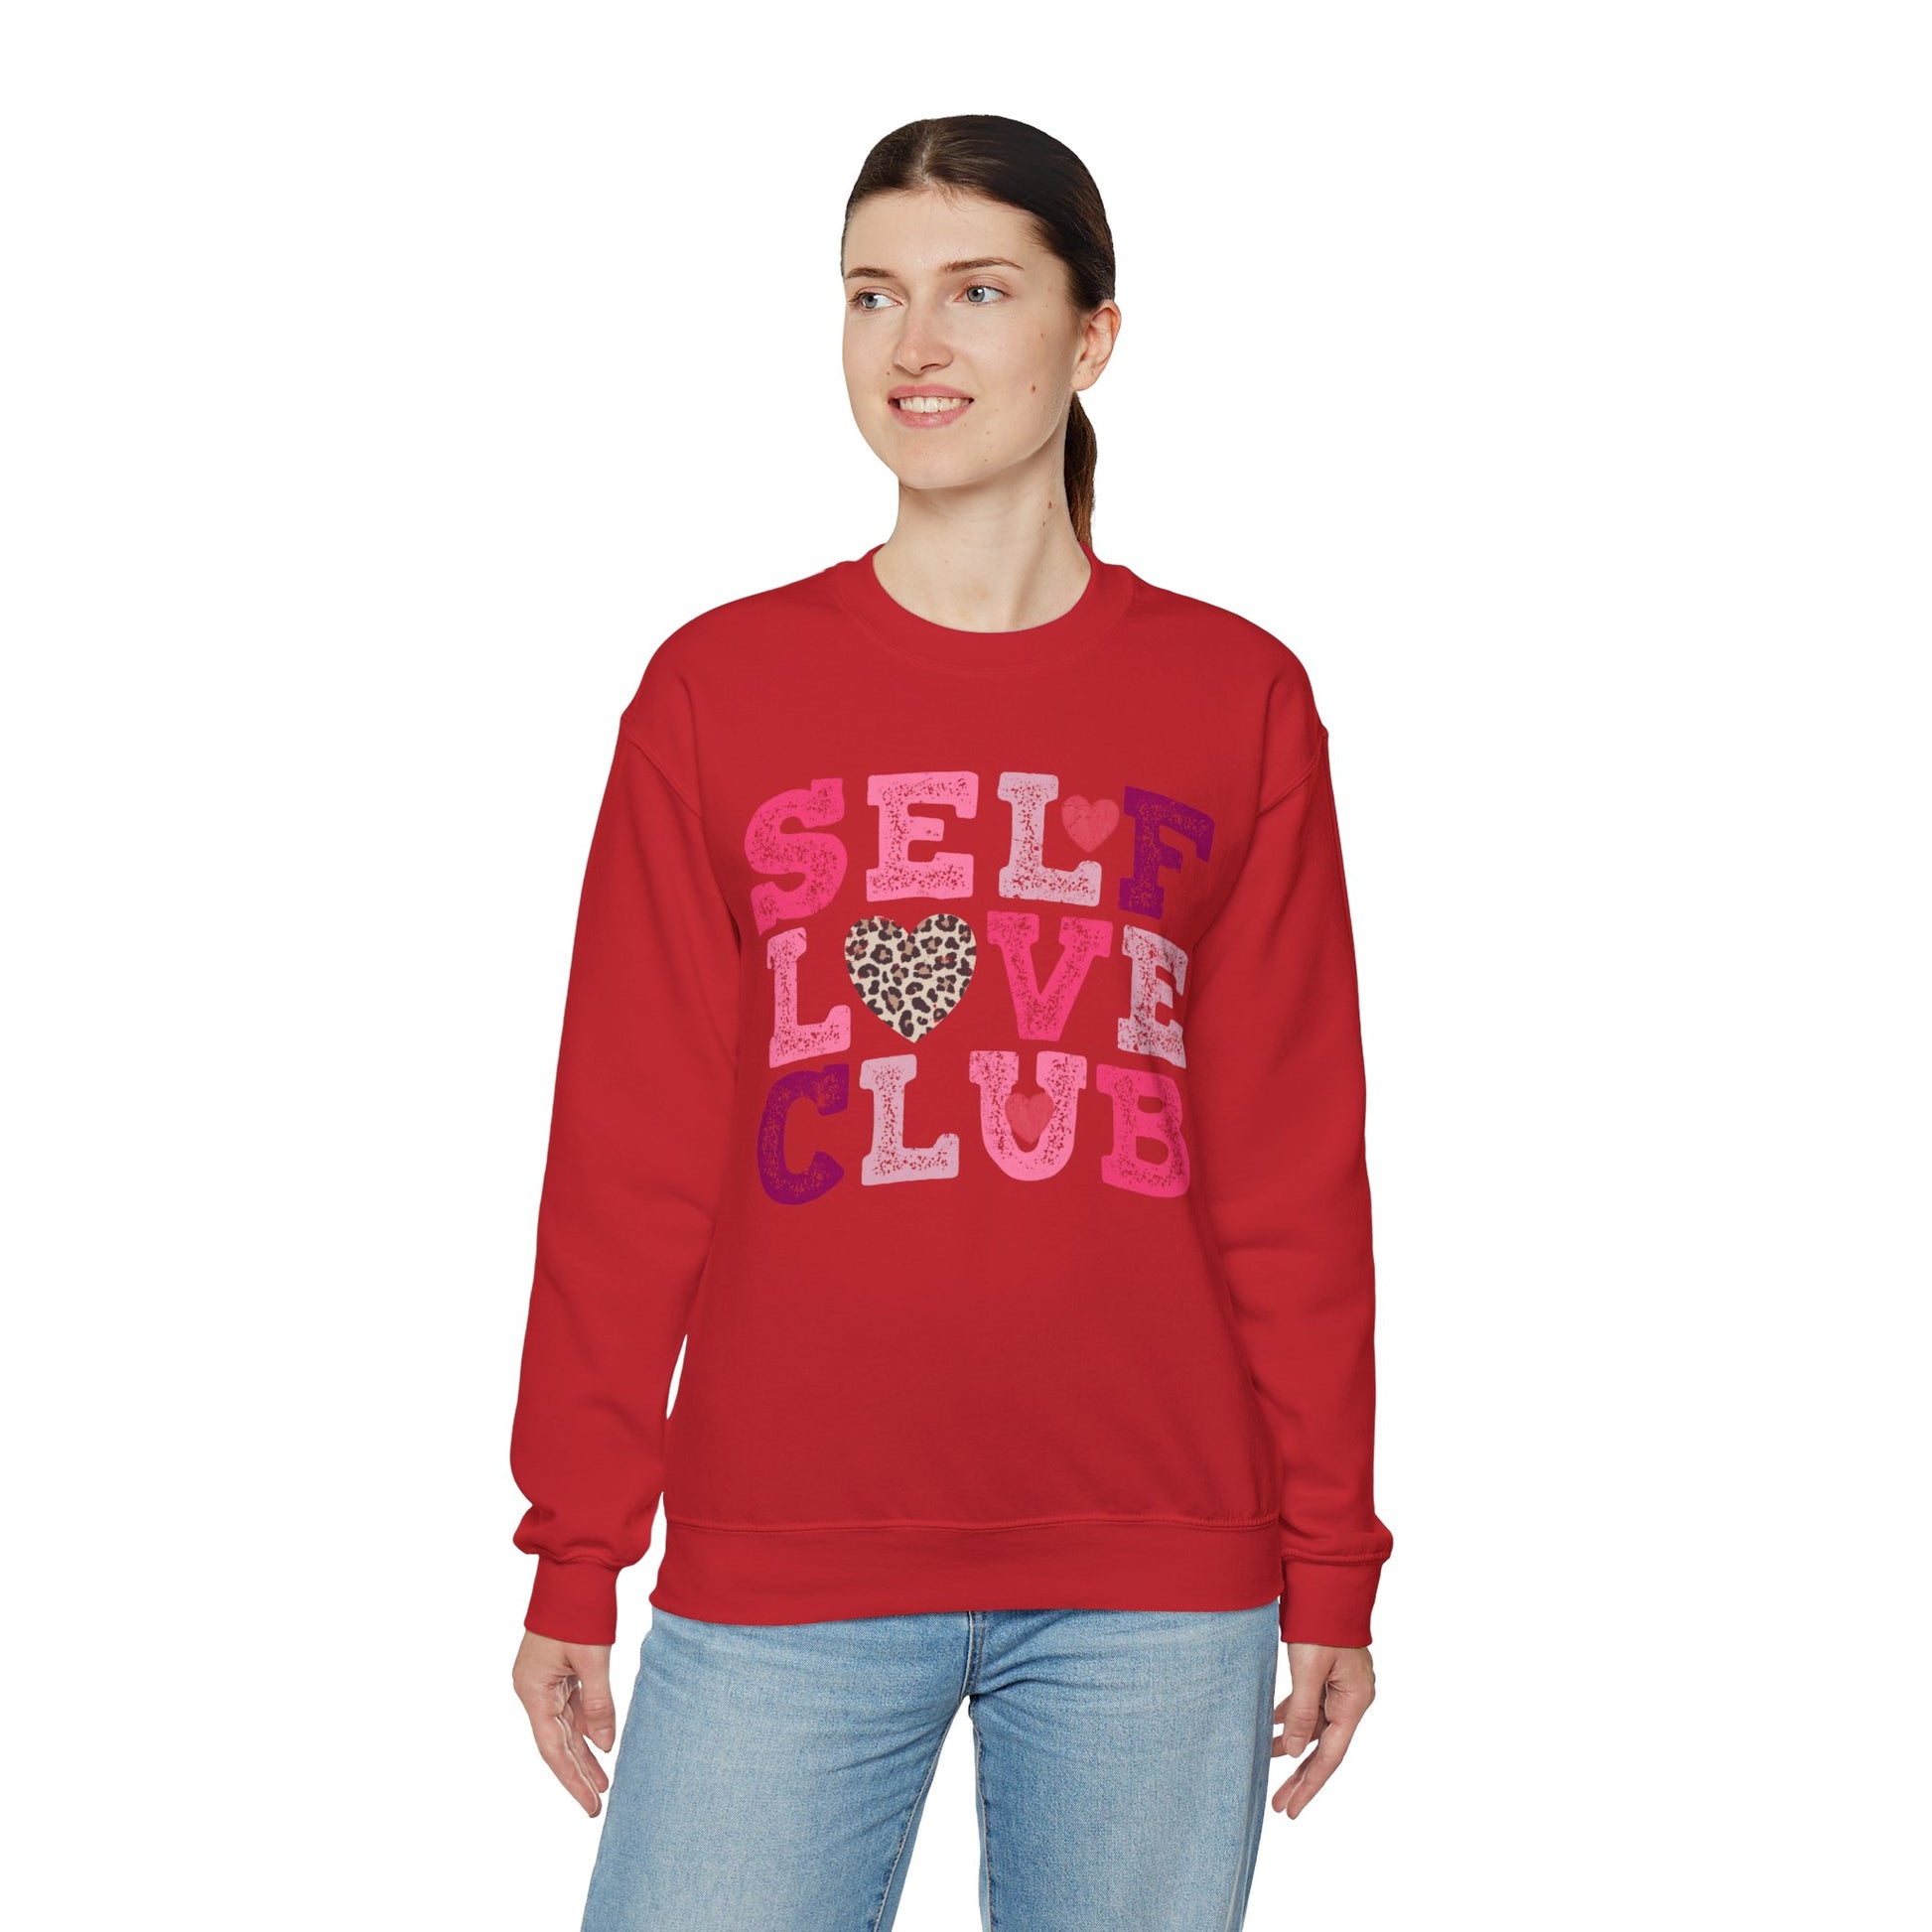 Self Love Club Sweatshirt Valentine's Day Sweatshirt, Cute Retro Graphic Crewneck 